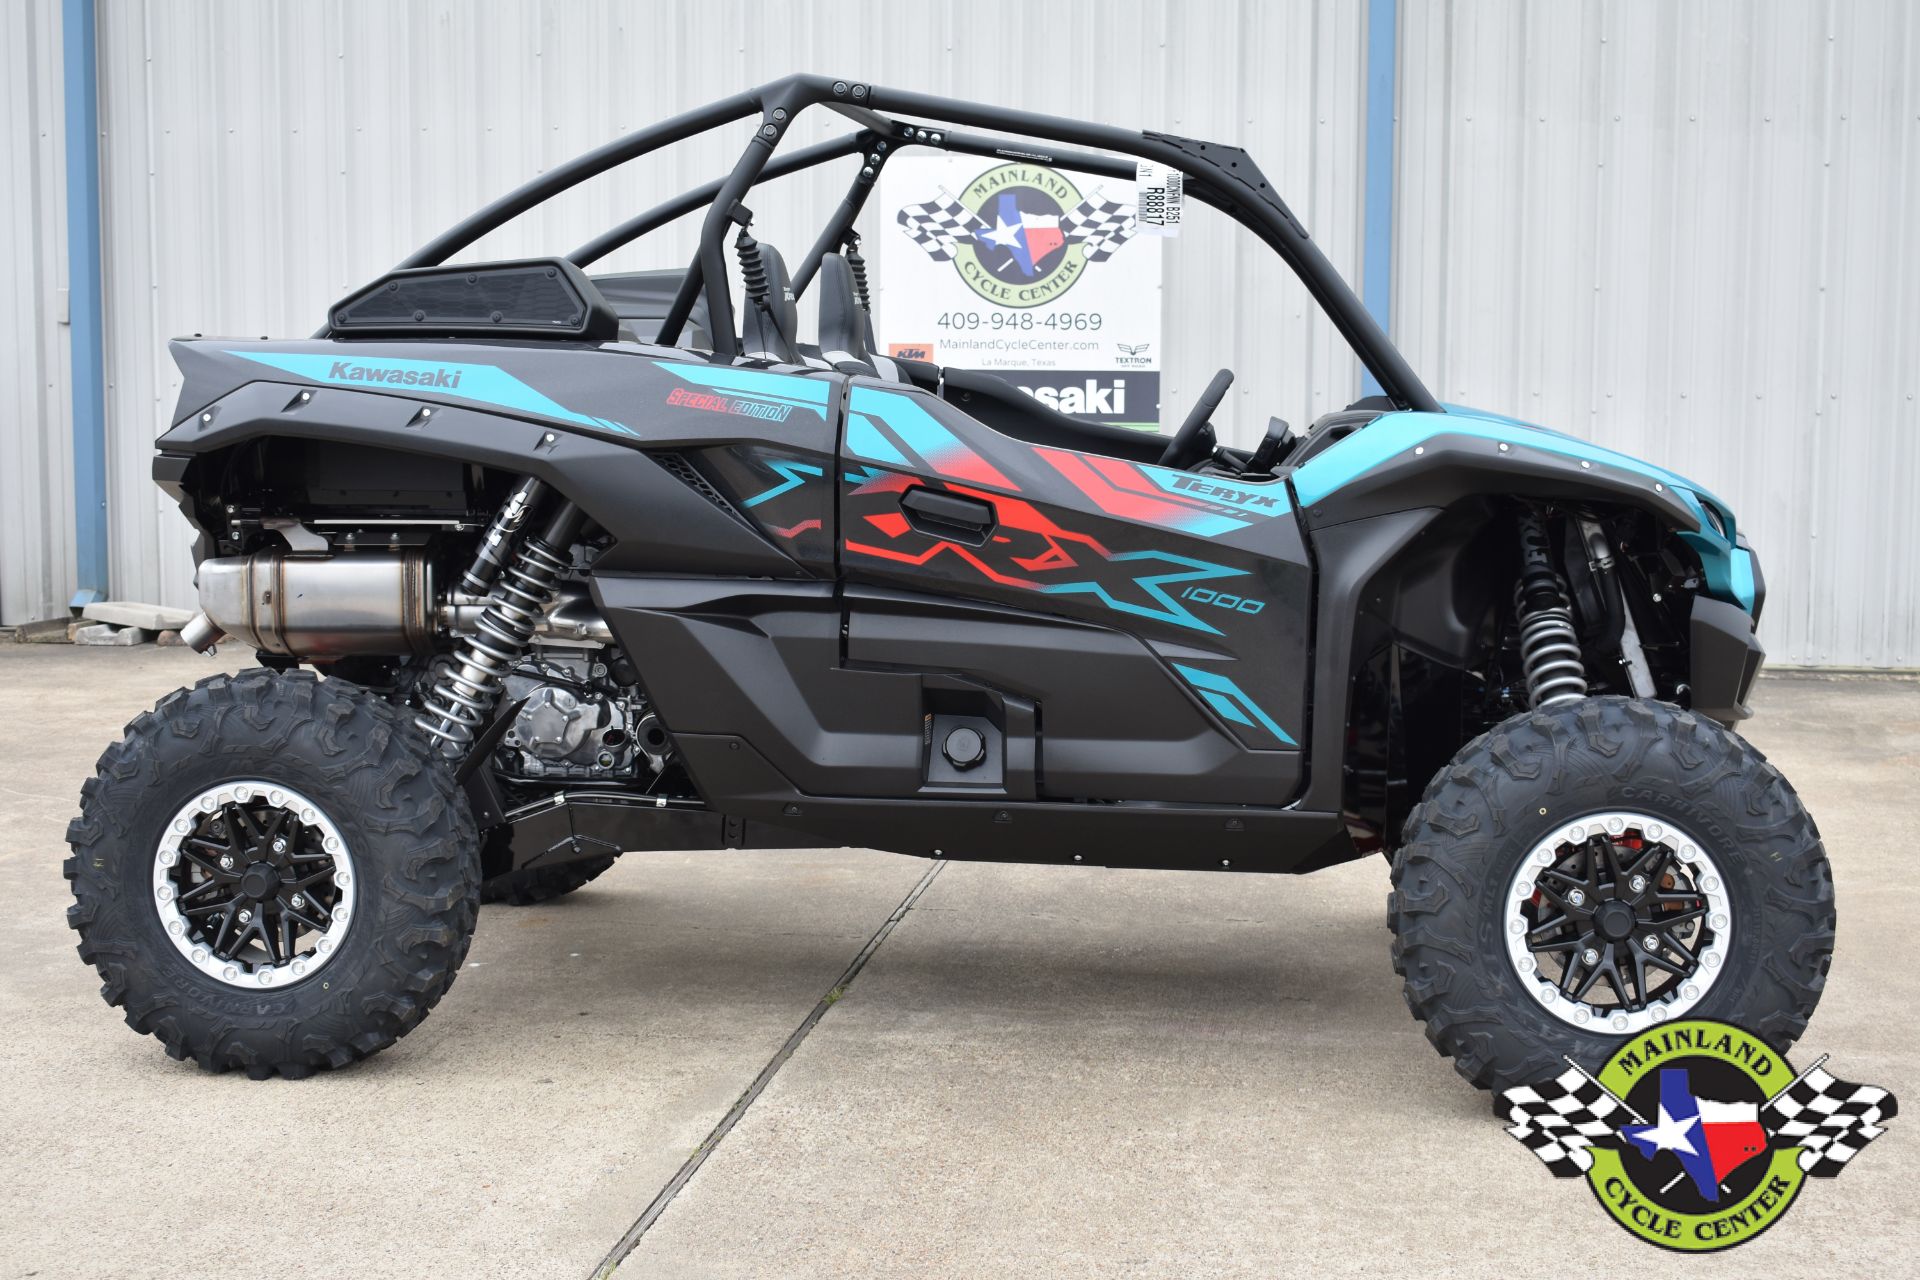 2022 Kawasaki Teryx KRX 1000 Special Edition in La Marque, Texas - Photo 1